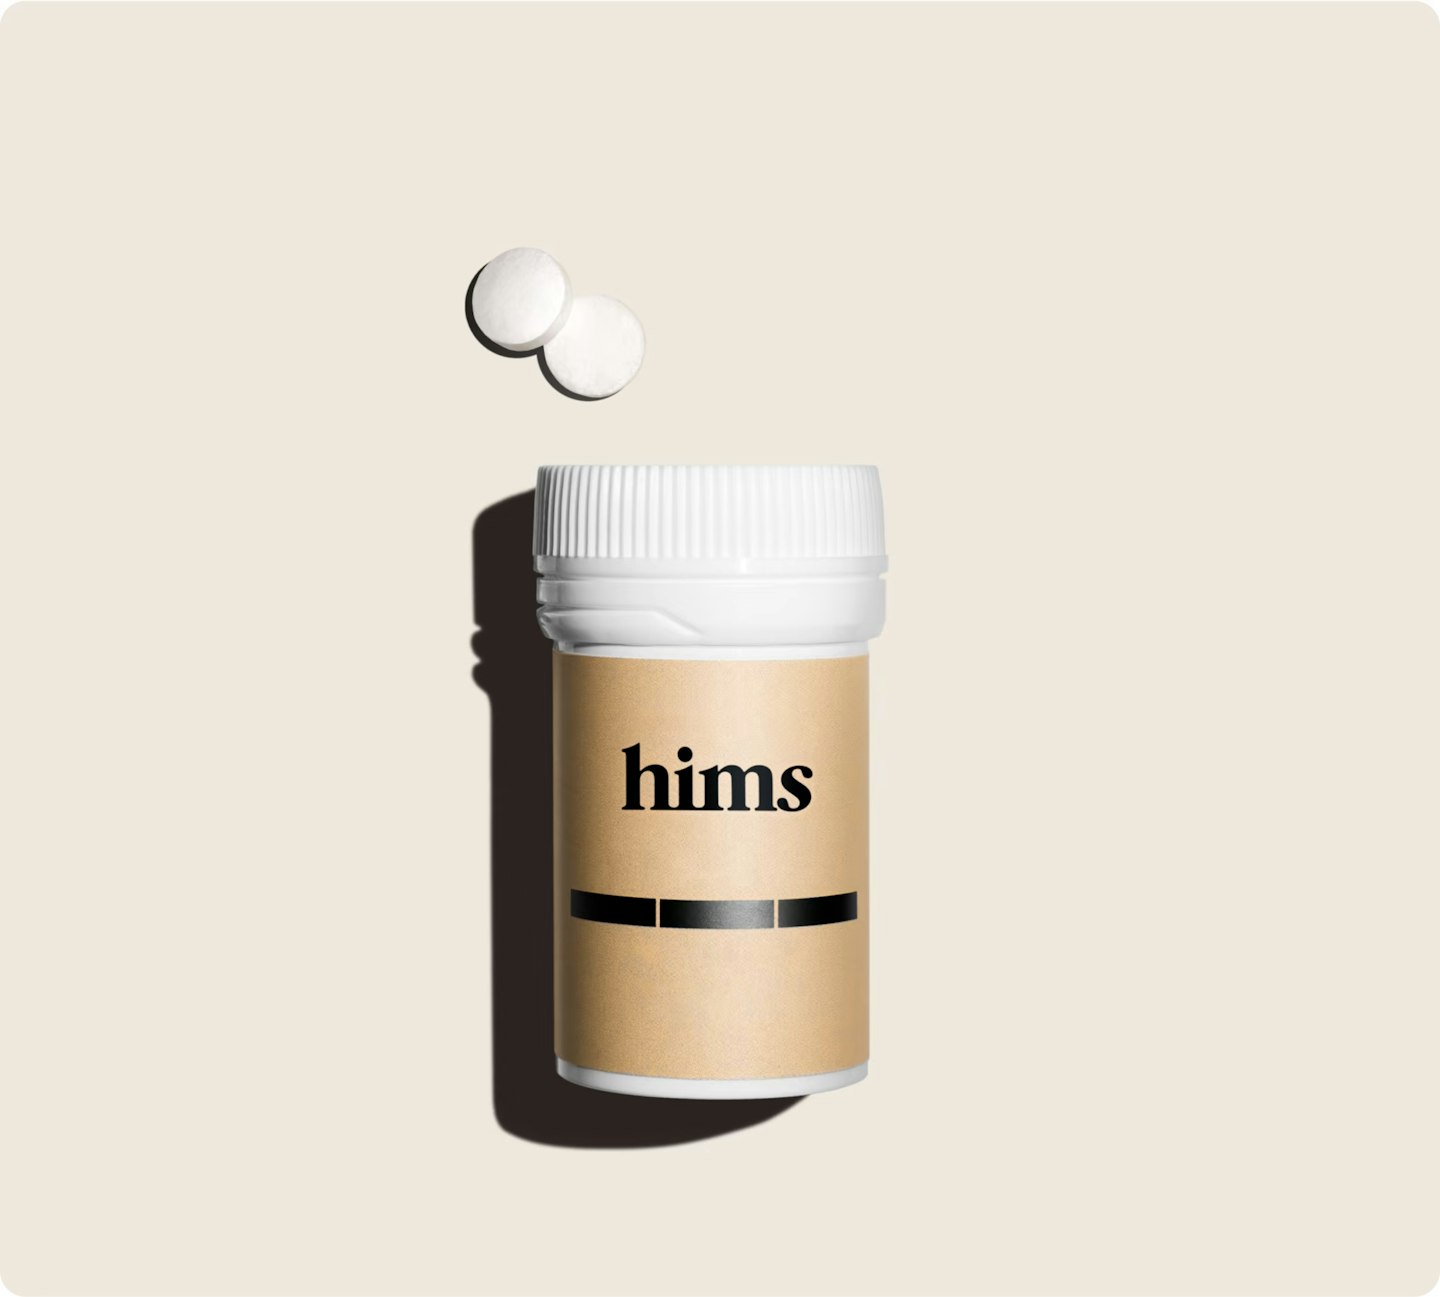 Hims The Hair Saving Tablets